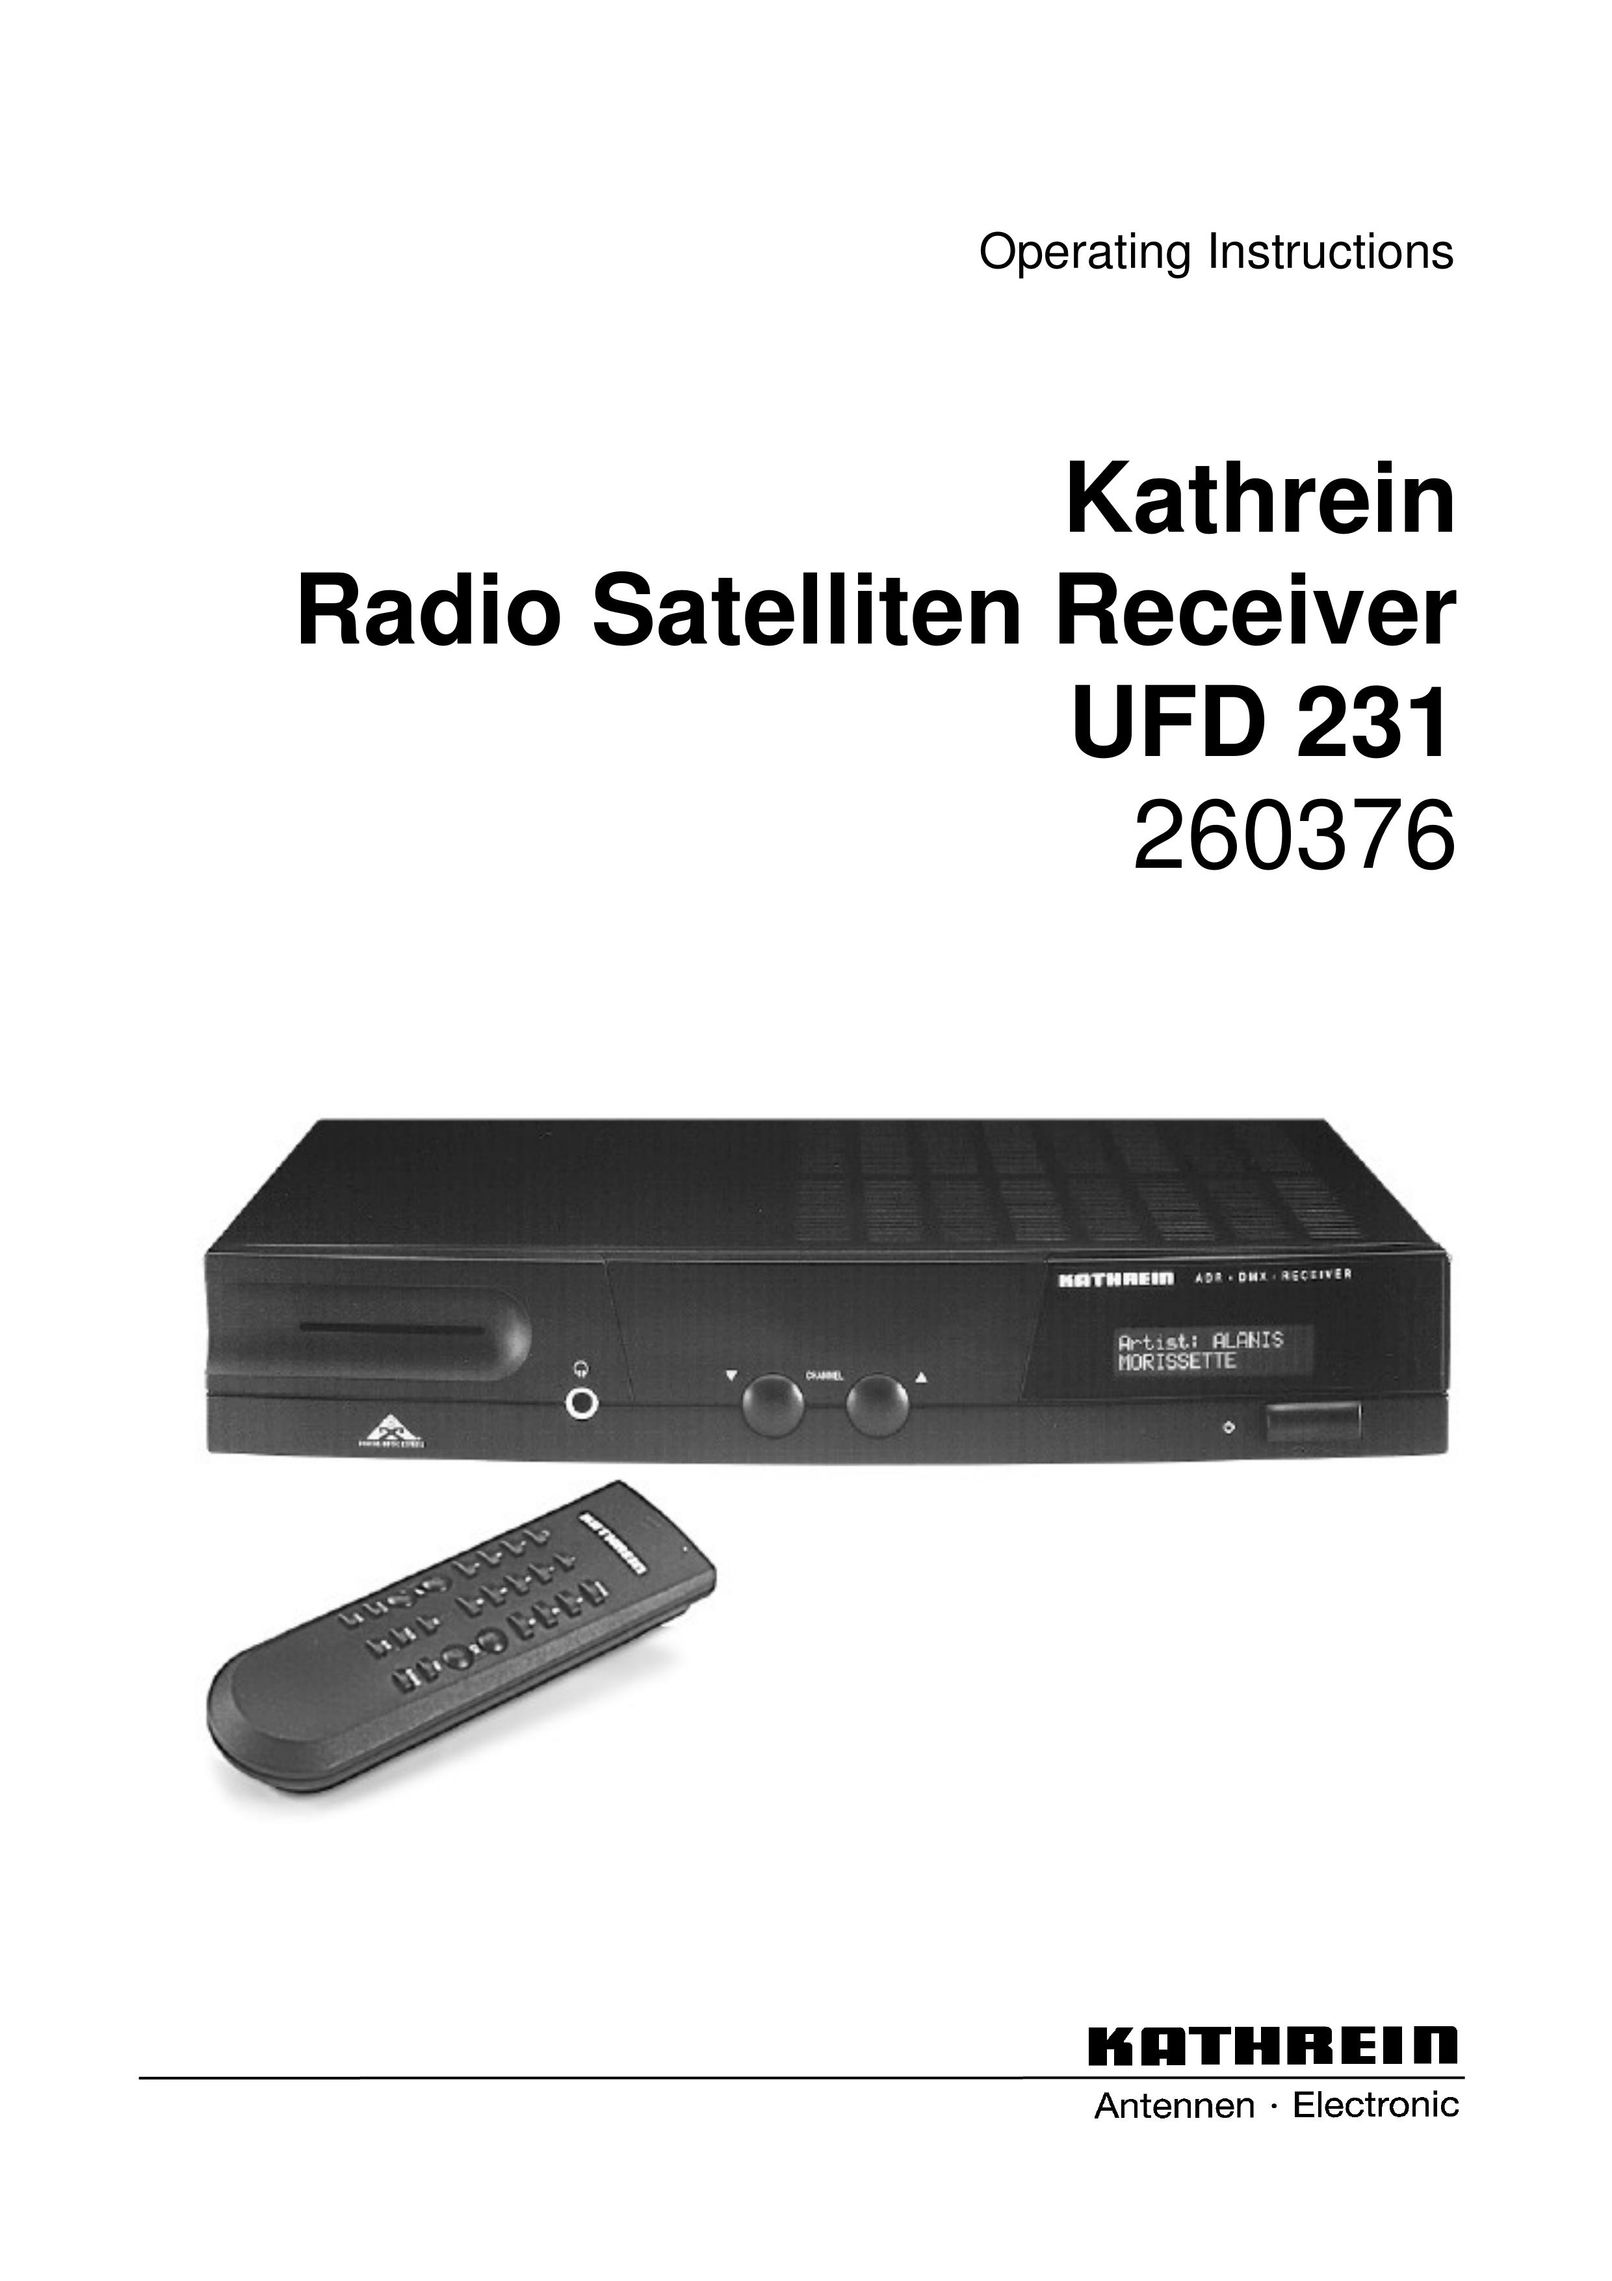 Kathrein UFD 231 Satellite Radio User Manual